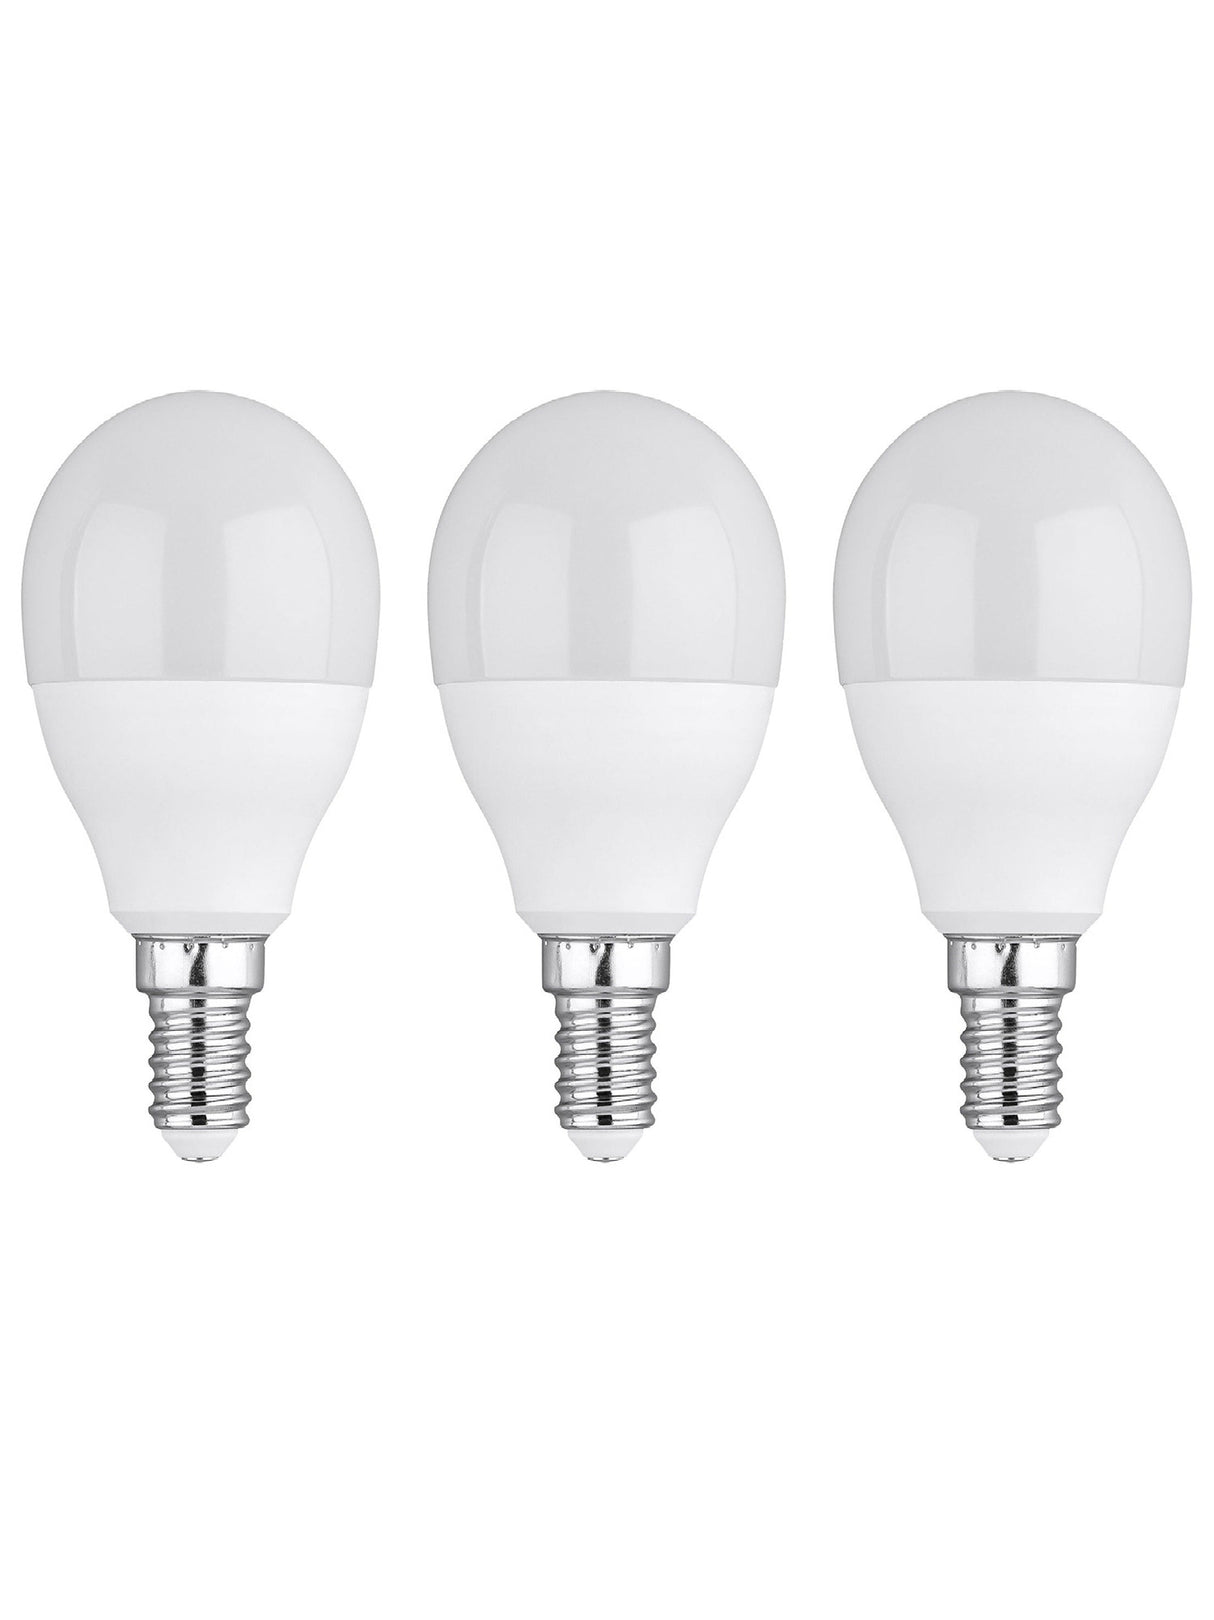 Image for Led Bulbs, Set Of 3